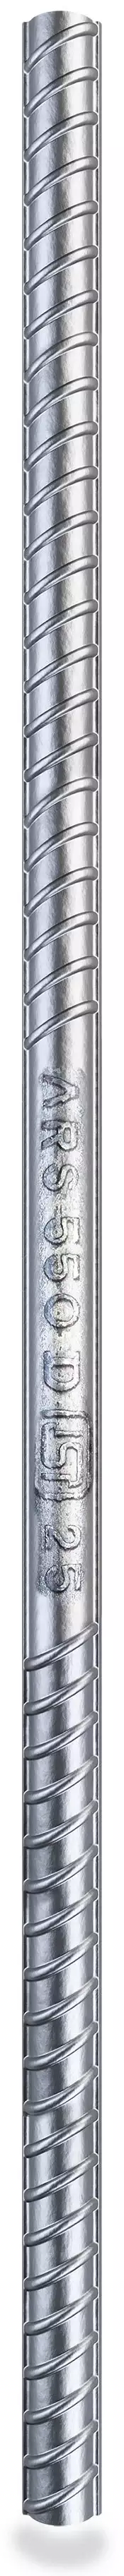 ARS 550D TMT Steel Bar